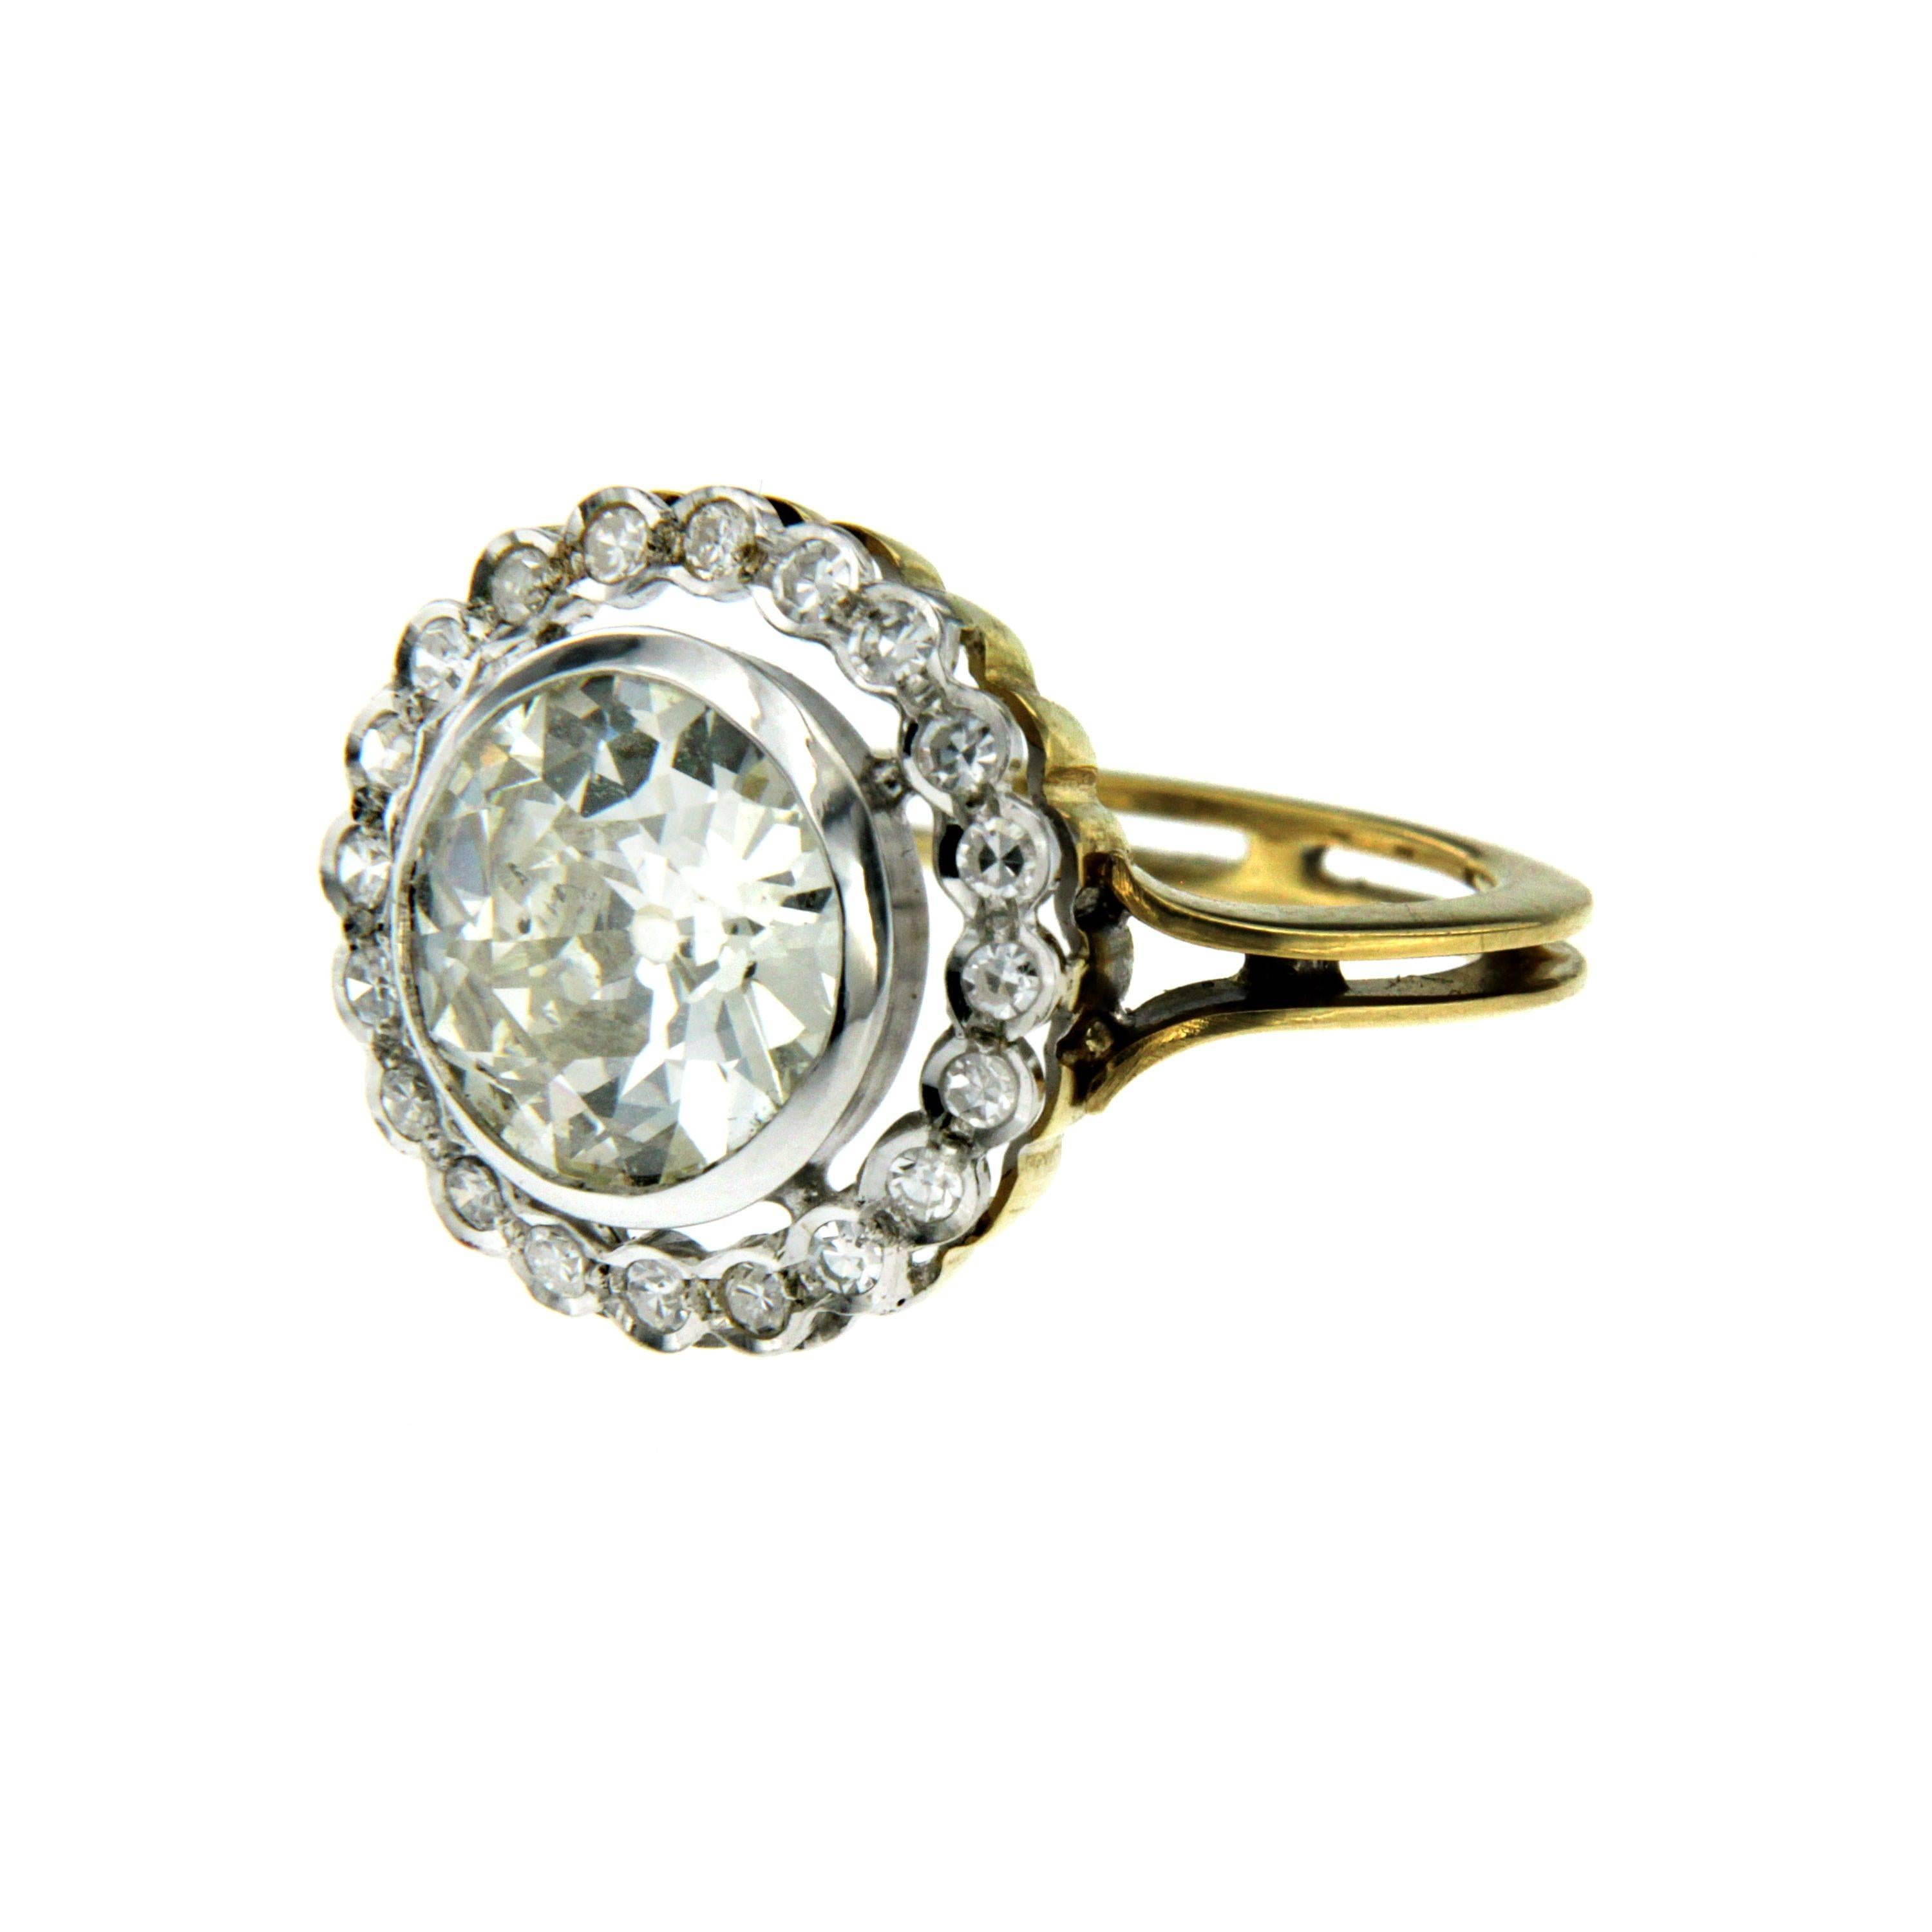 Old Mine Cut Victorian Style 3.46 Carat Diamond Gold Ring